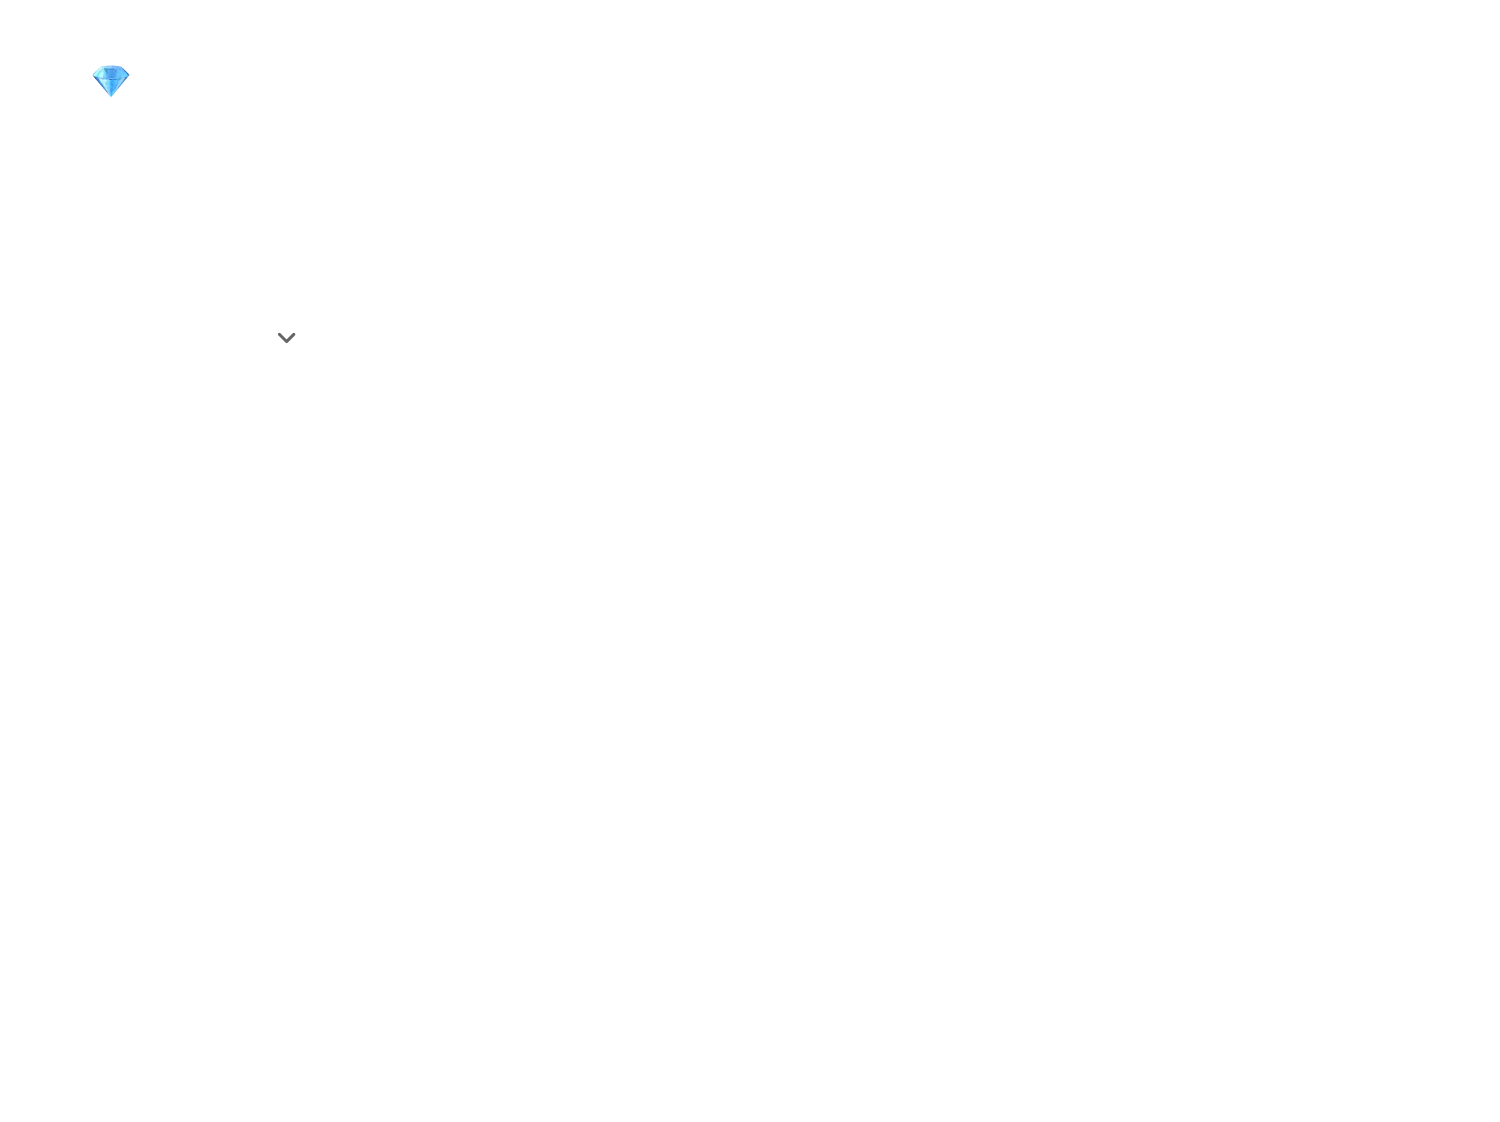 Project's usage stats tab